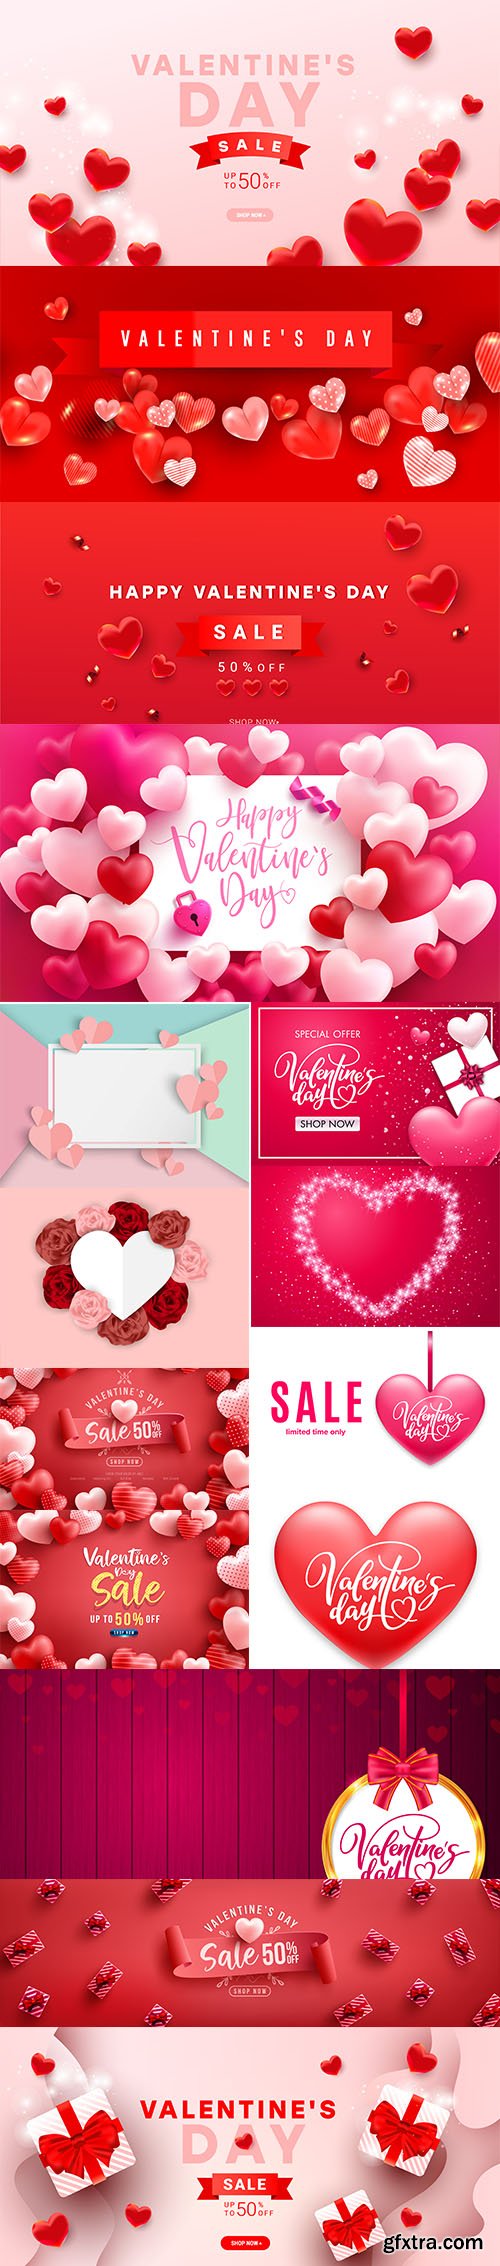 Vector Set of Romantic Valentines Day Illustrations Vol 4